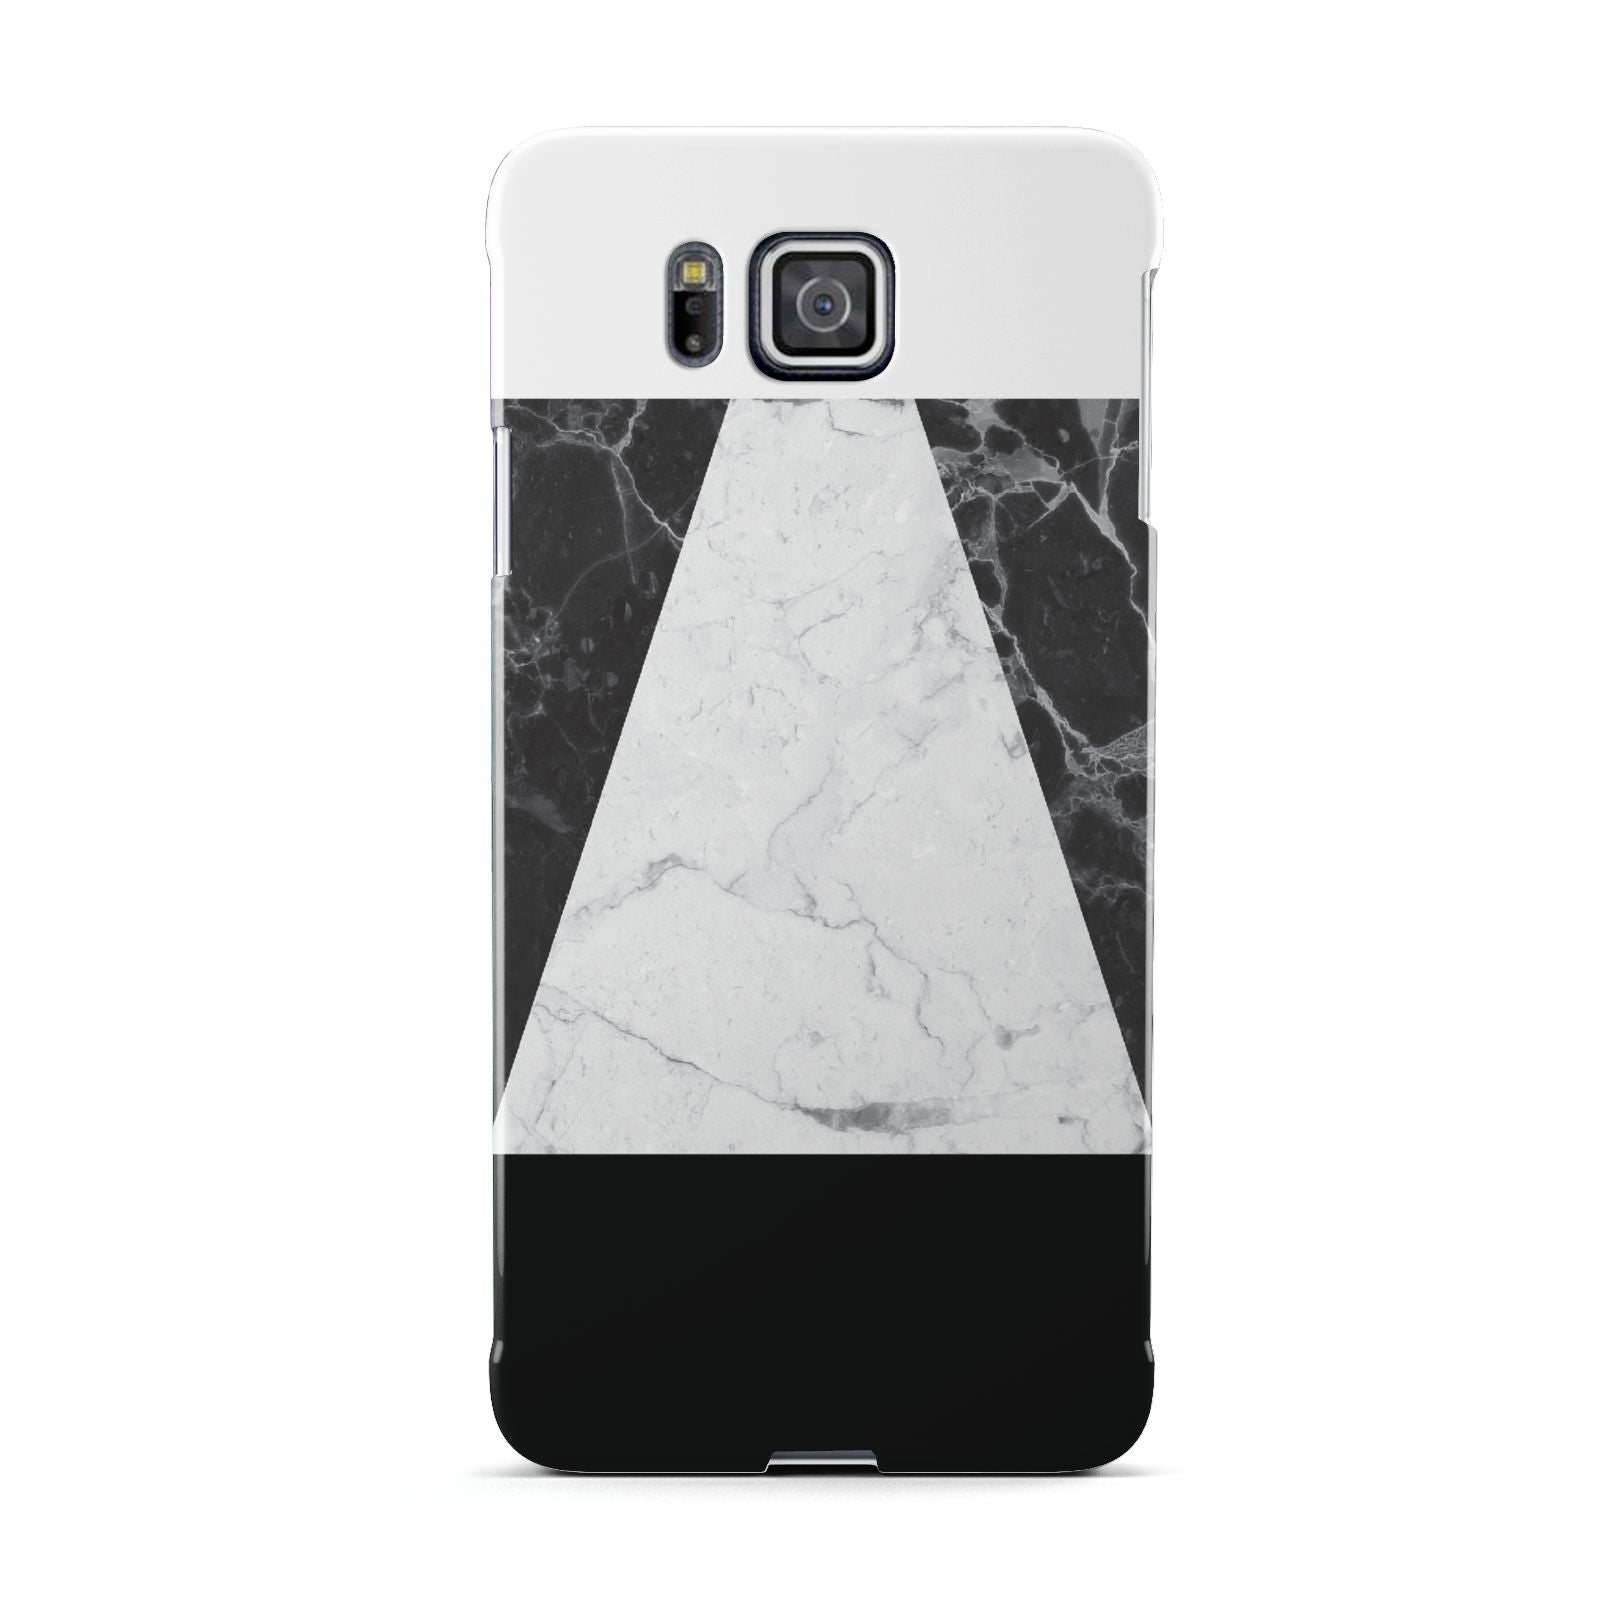 Marble White Black Samsung Galaxy Alpha Case